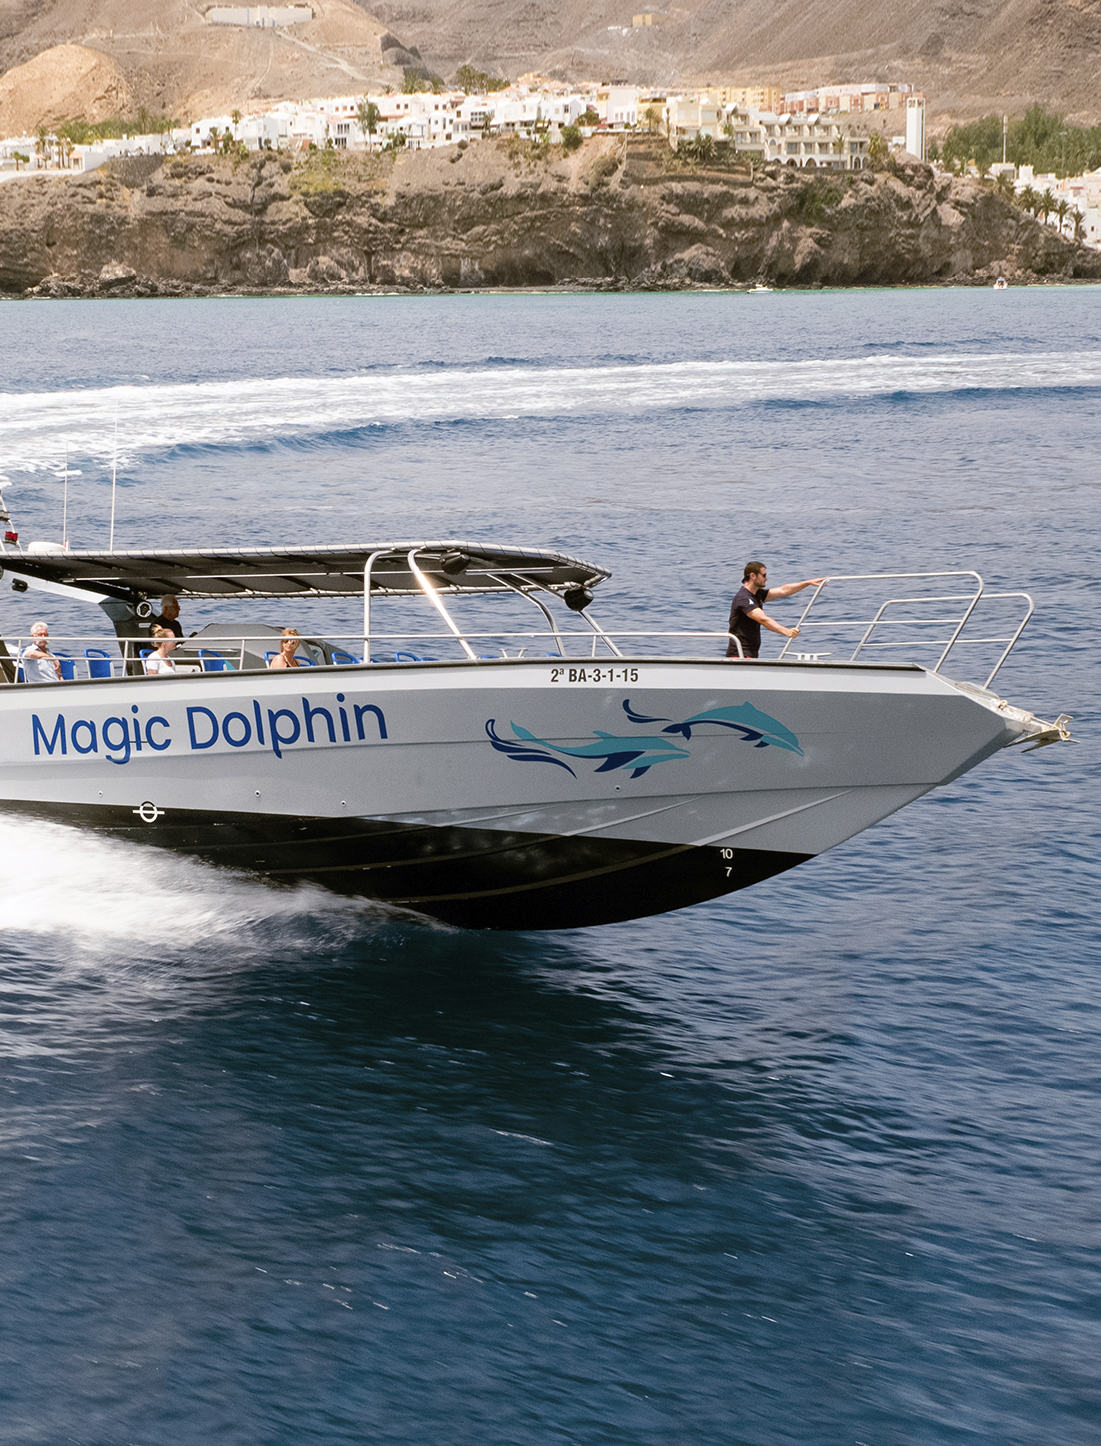 embarcación magic dolphin magicandsailing.com